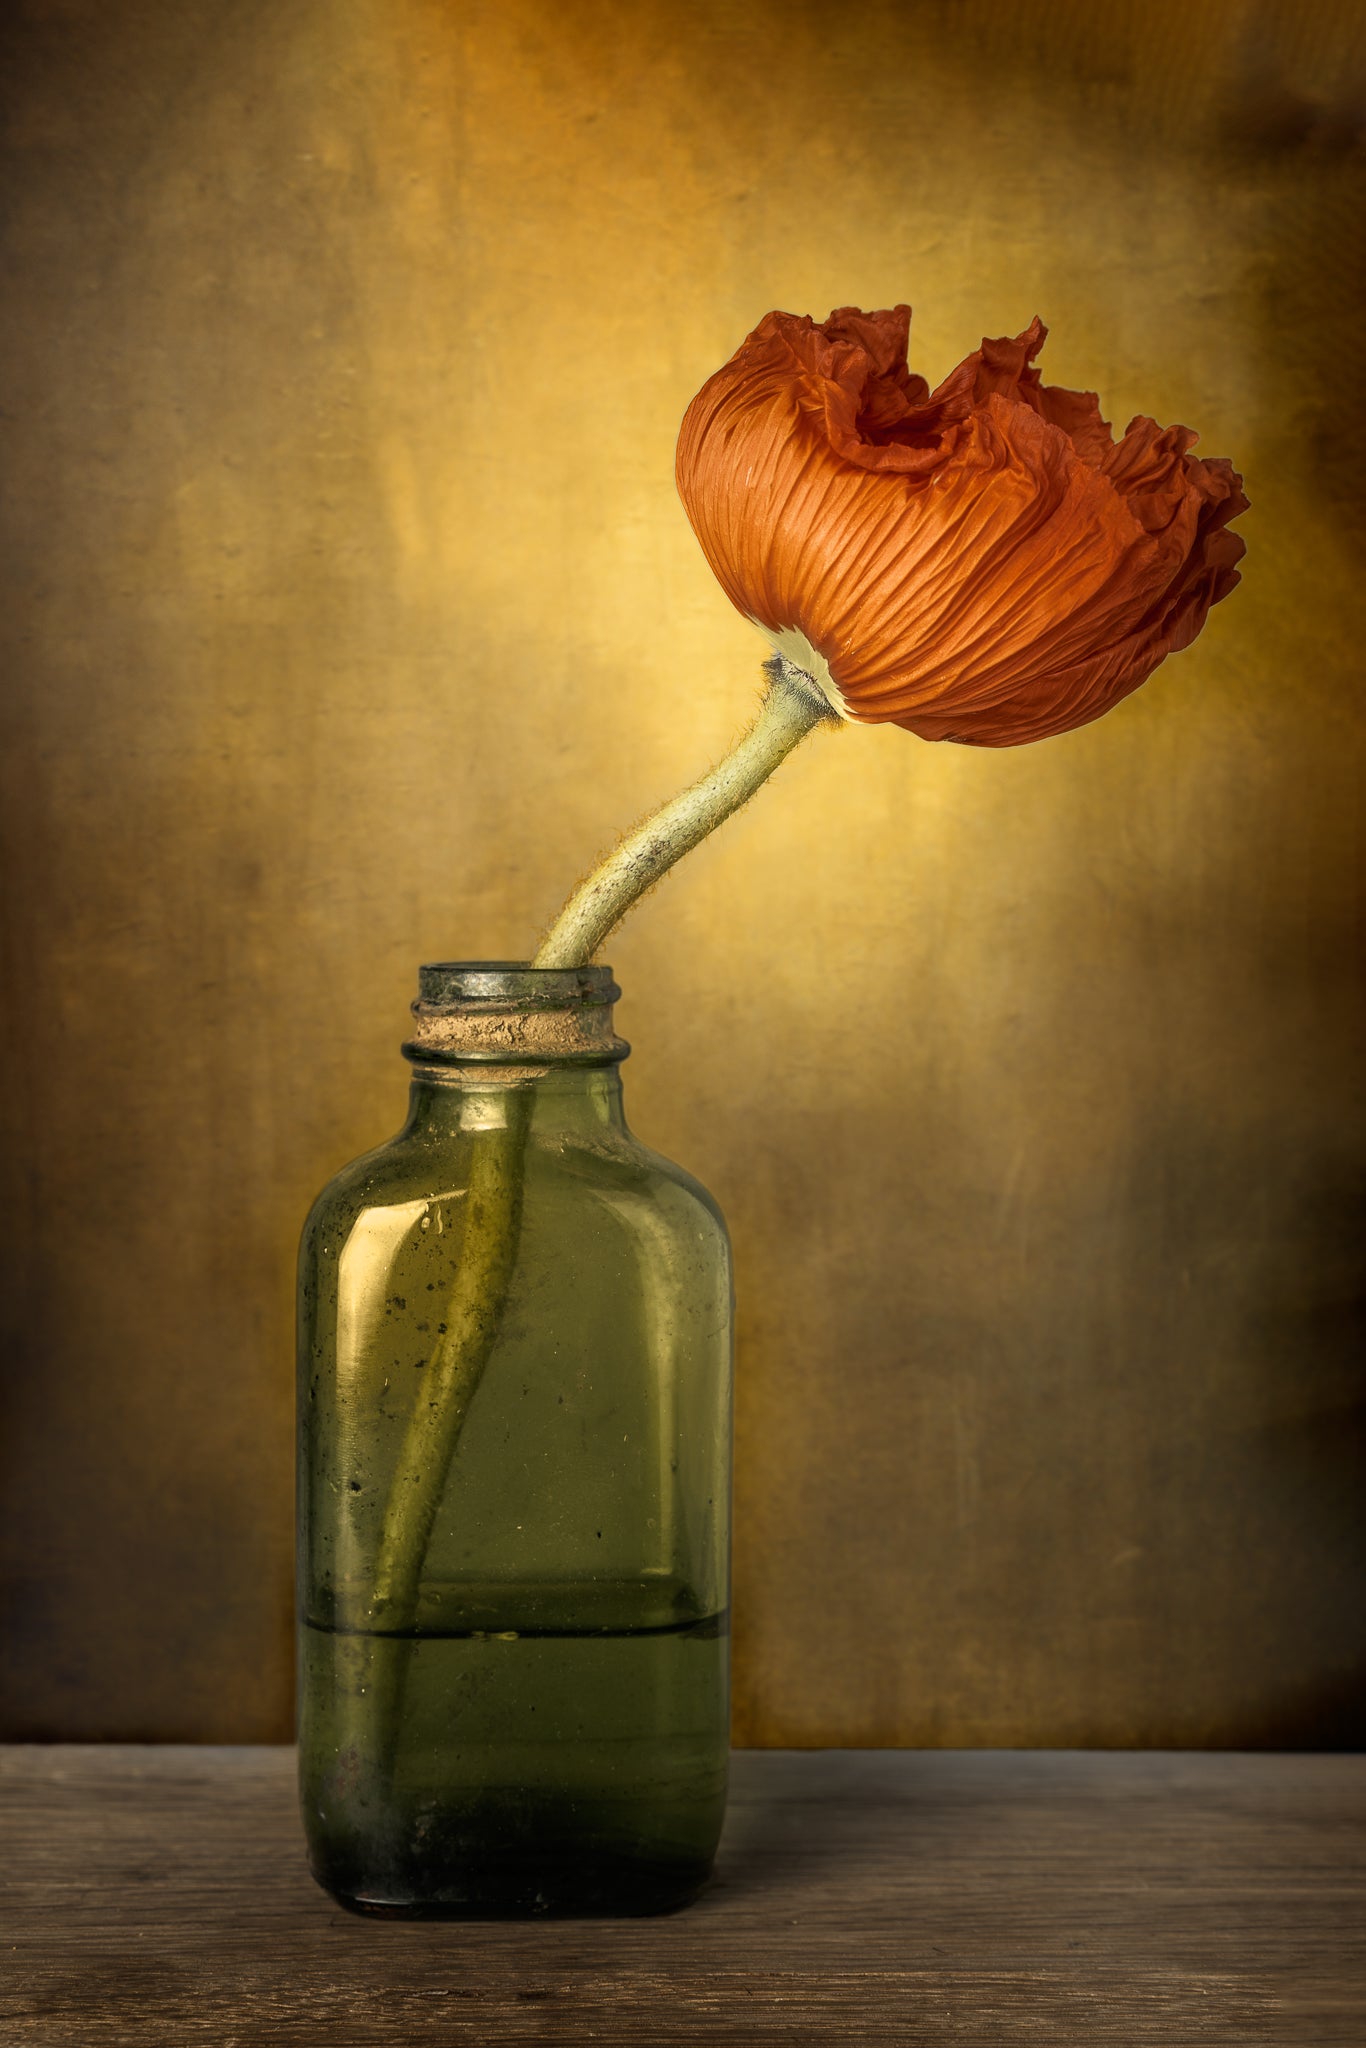 Fine art flower photograph of a red poppy in a vintage bottle titled "Hope is a Journey" by Cameron Dreaux of Dreaux Fine Art.